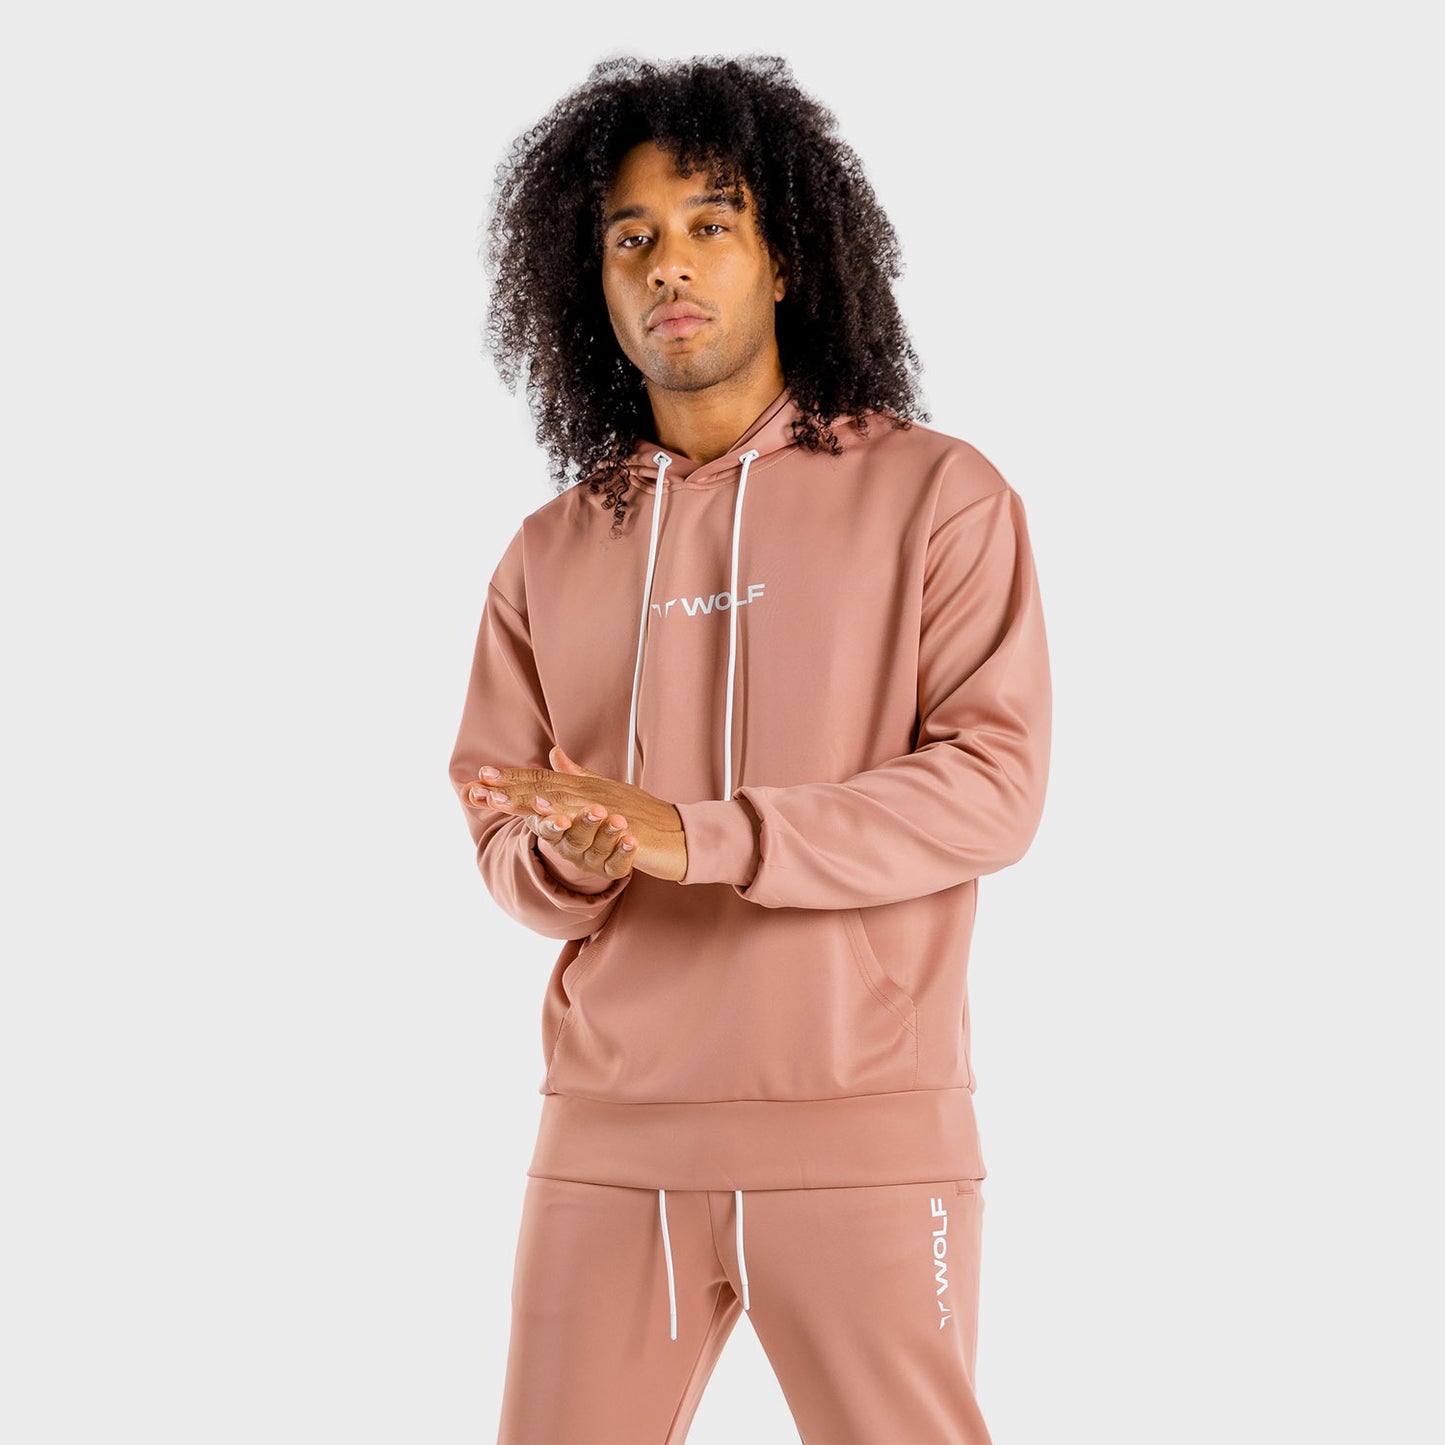 squatwolf-gym-wear-primal-hoodie-men-pink-workout-hoodies-for-men